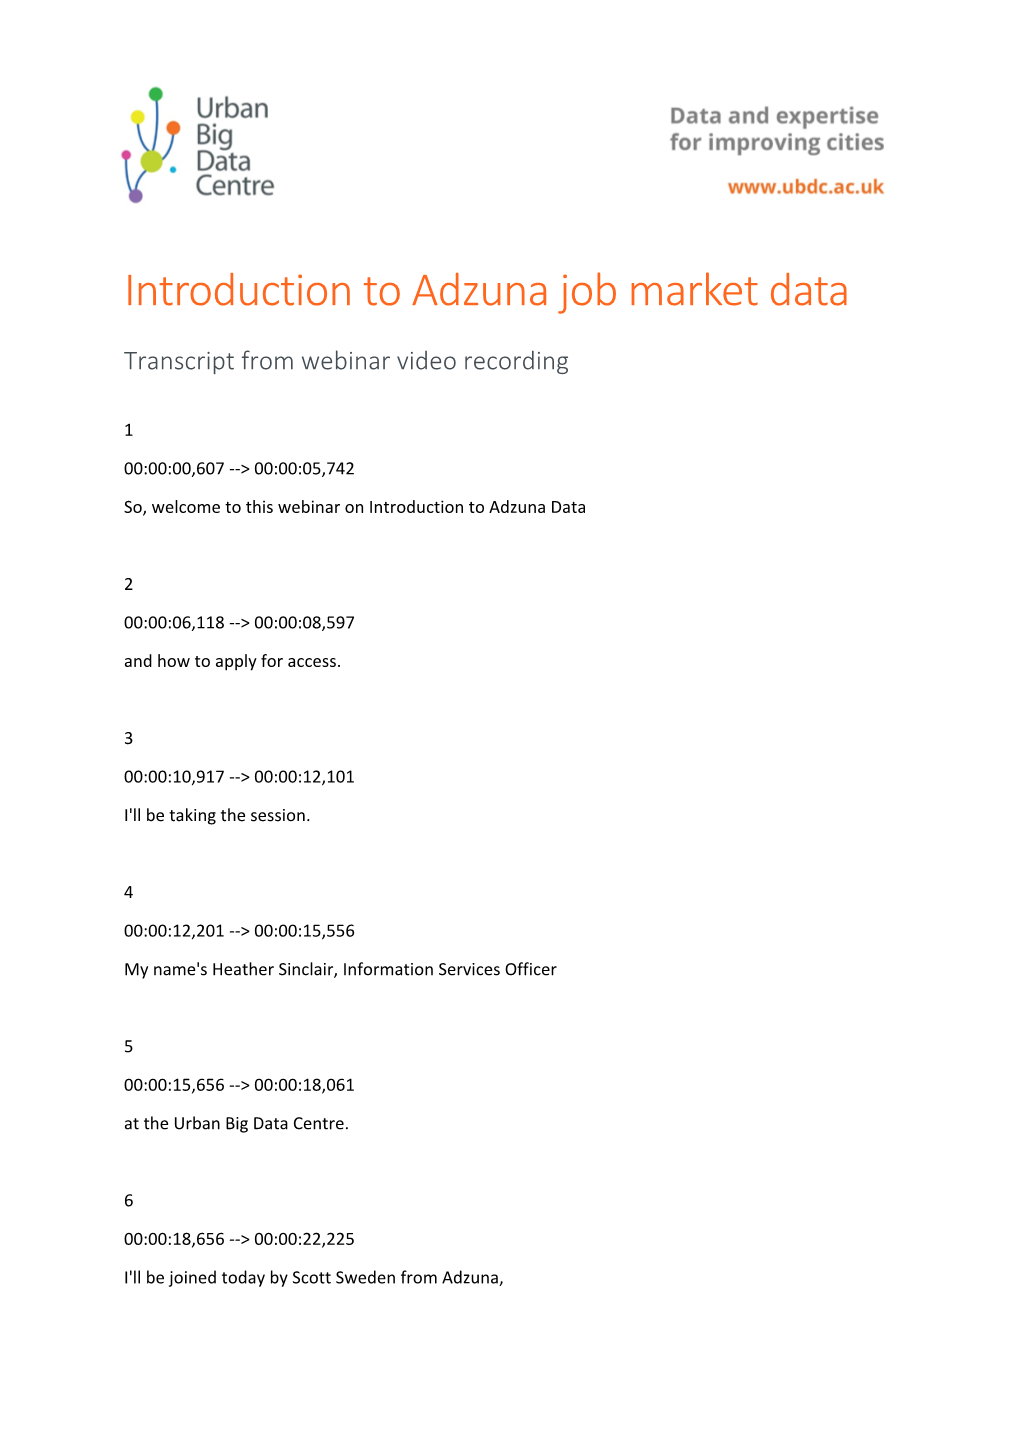 Introduction to Adzuna Job Market Data